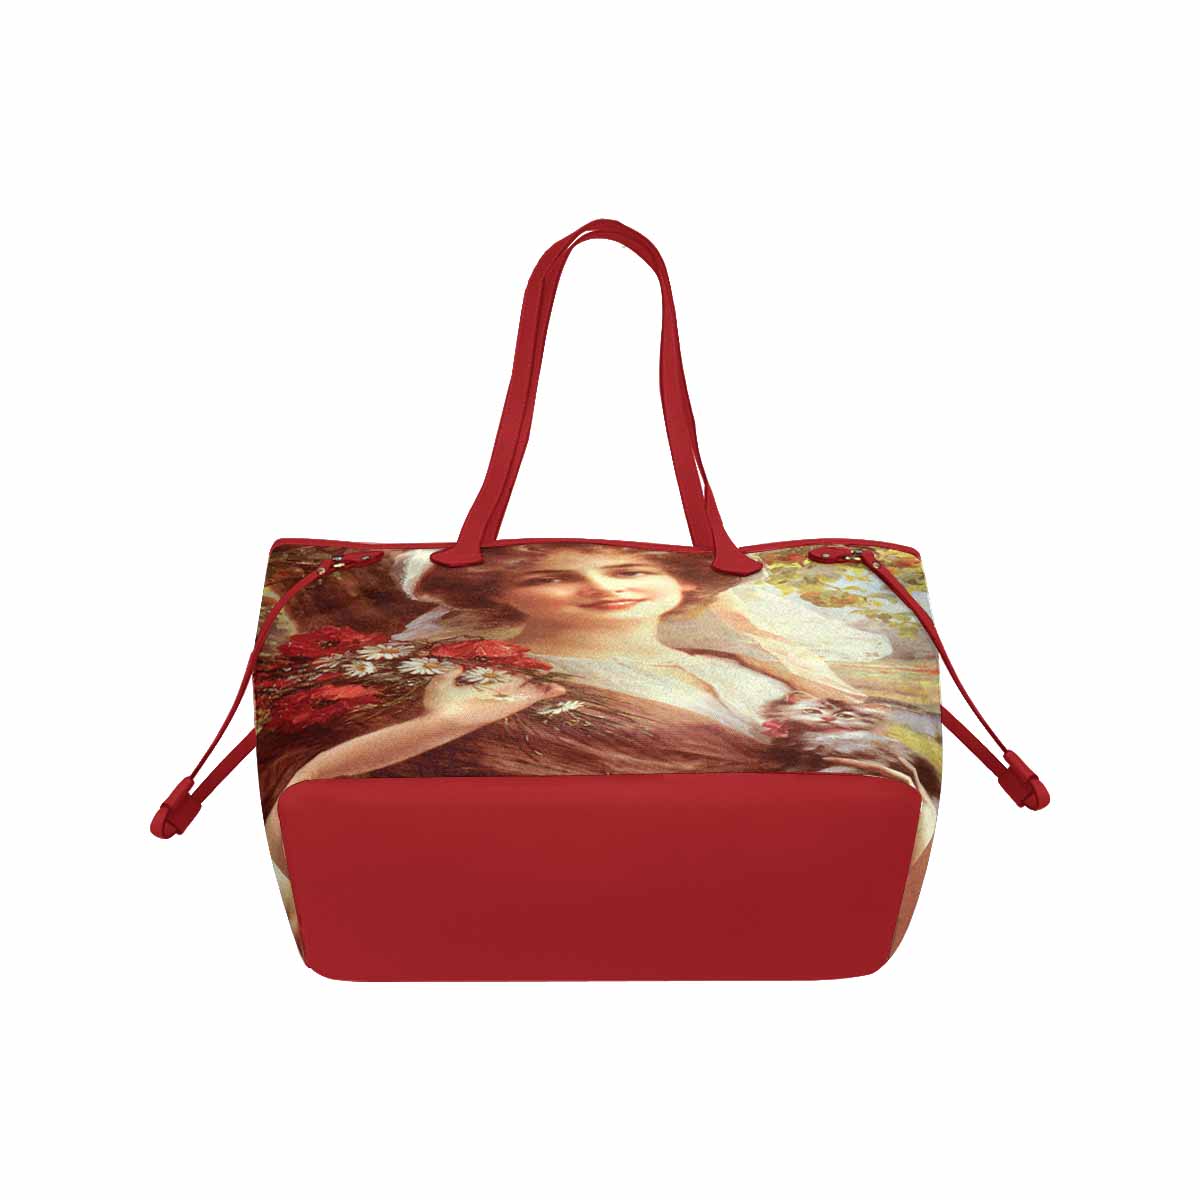 Victorian Lady Design Handbag, Model 1695361, Country Summer, RED TRIM